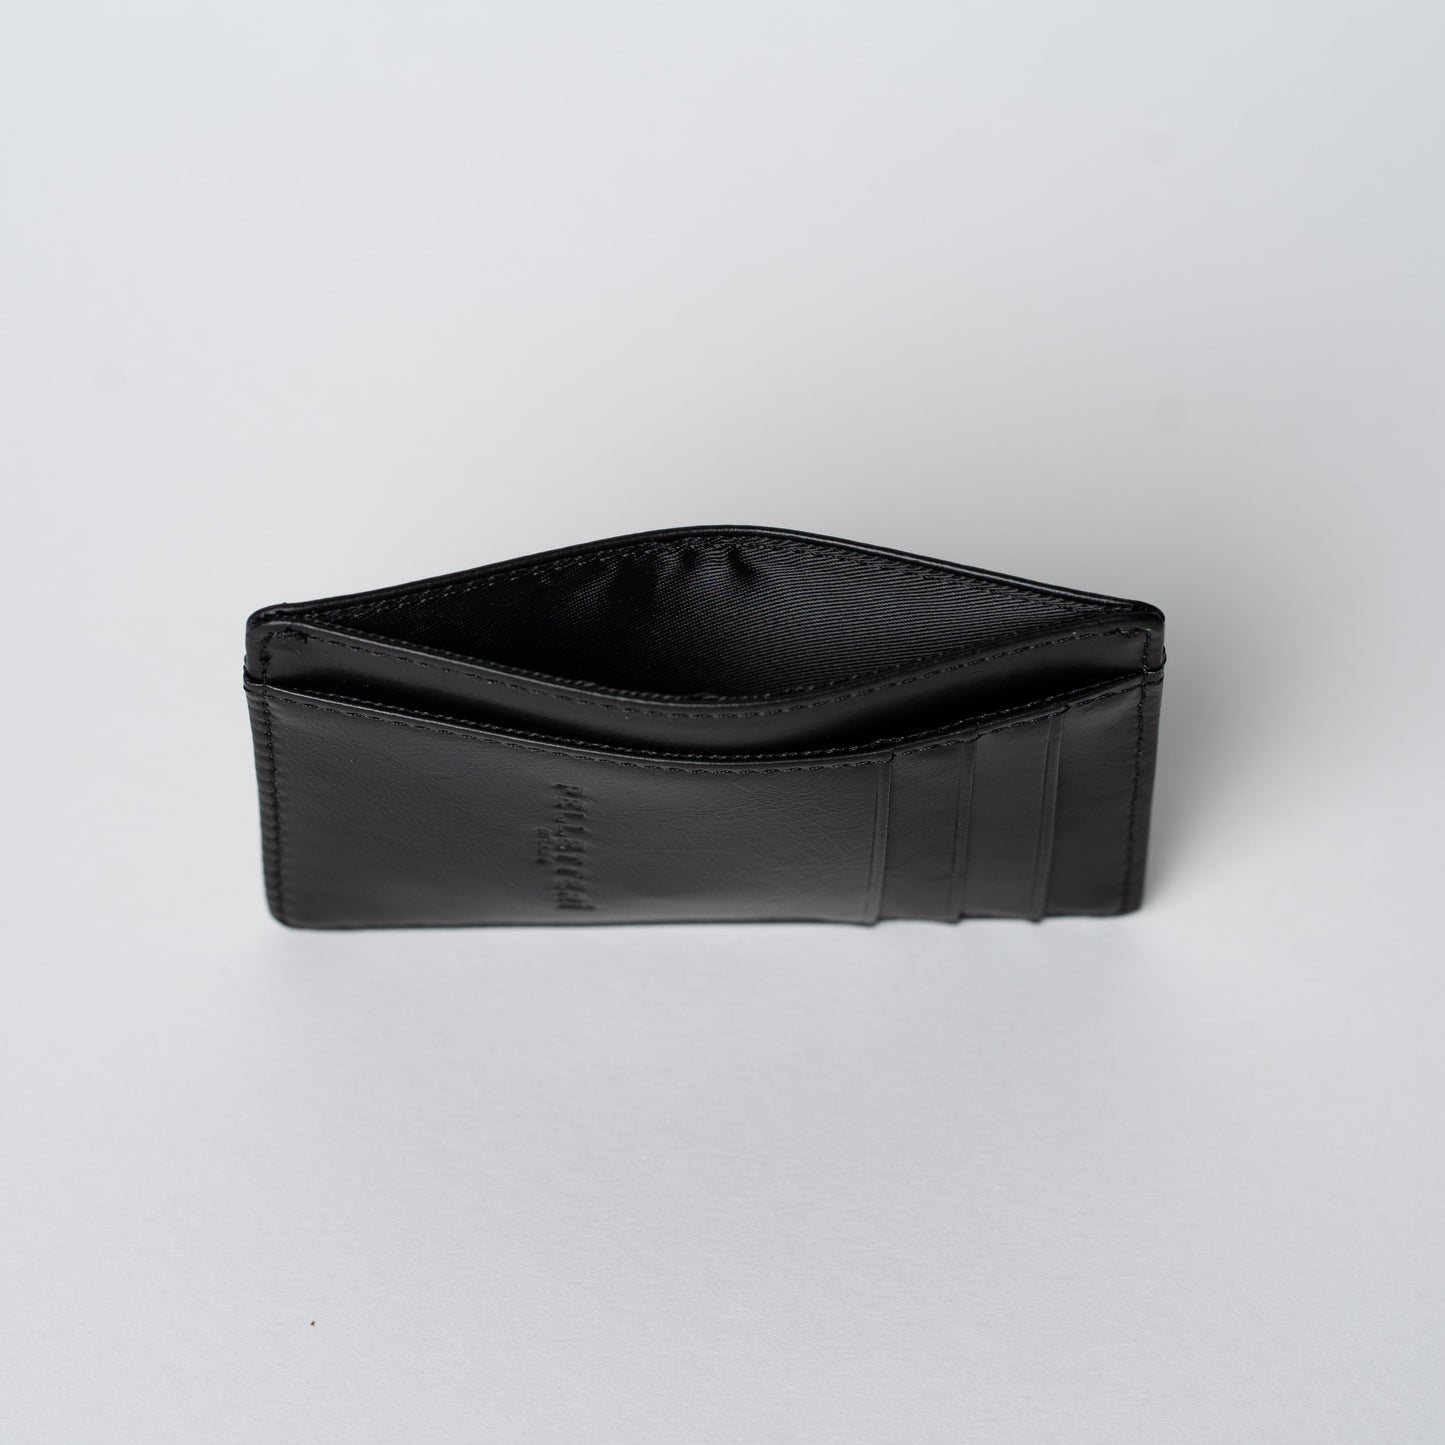 Wallet - Card holder in soft leather - Slim